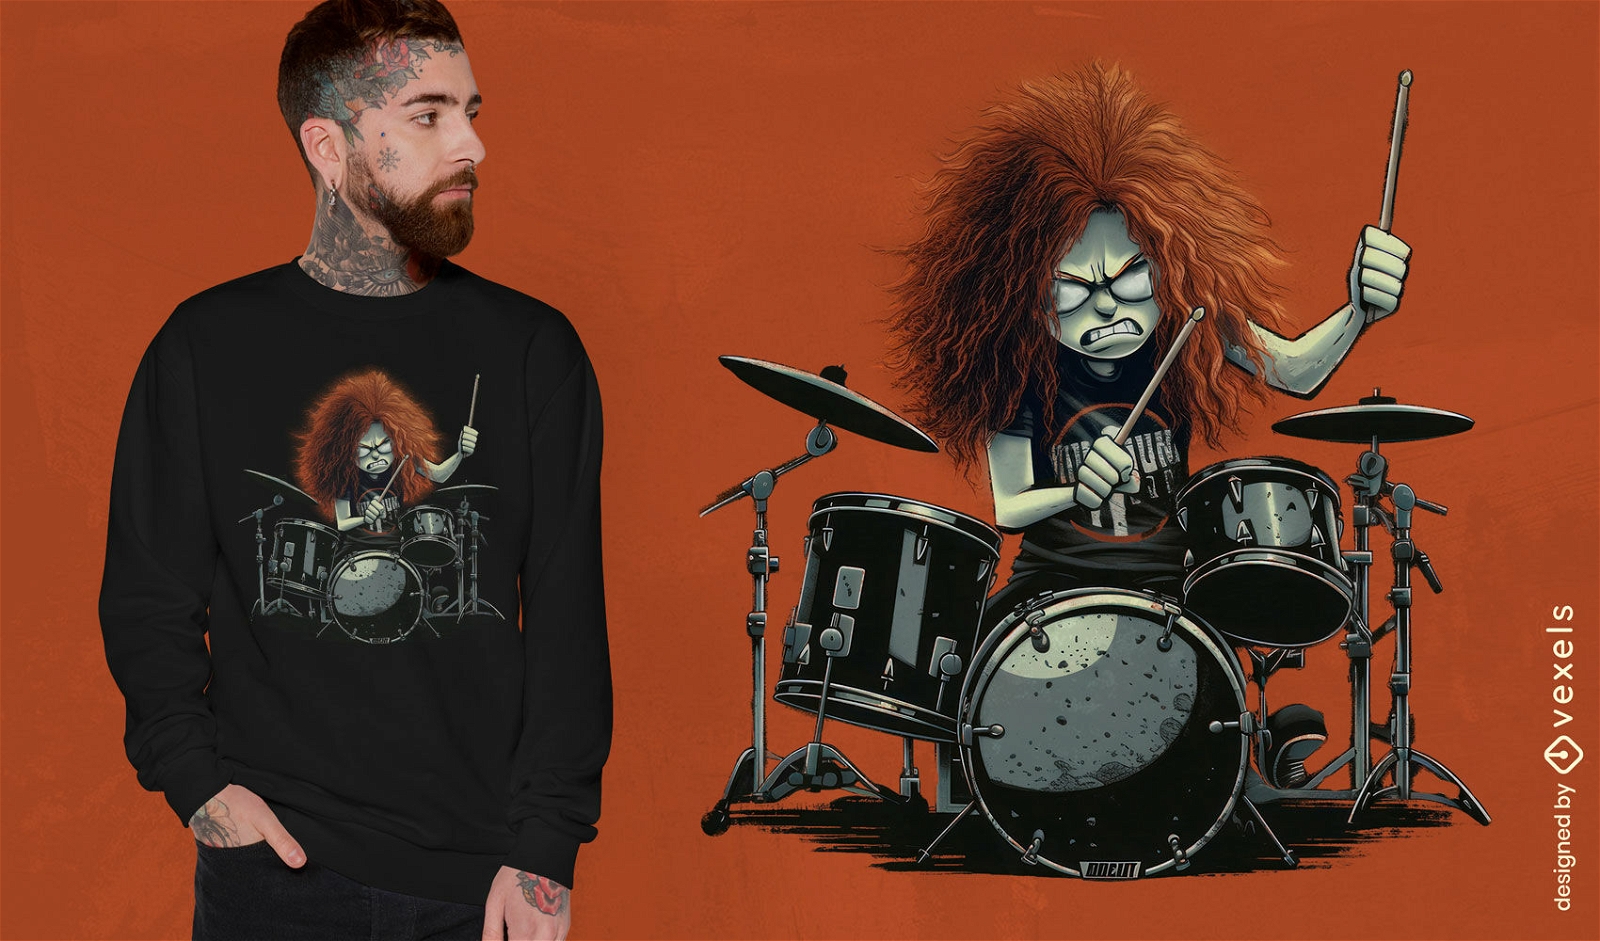 Crazy redhead drummer t-shirt design